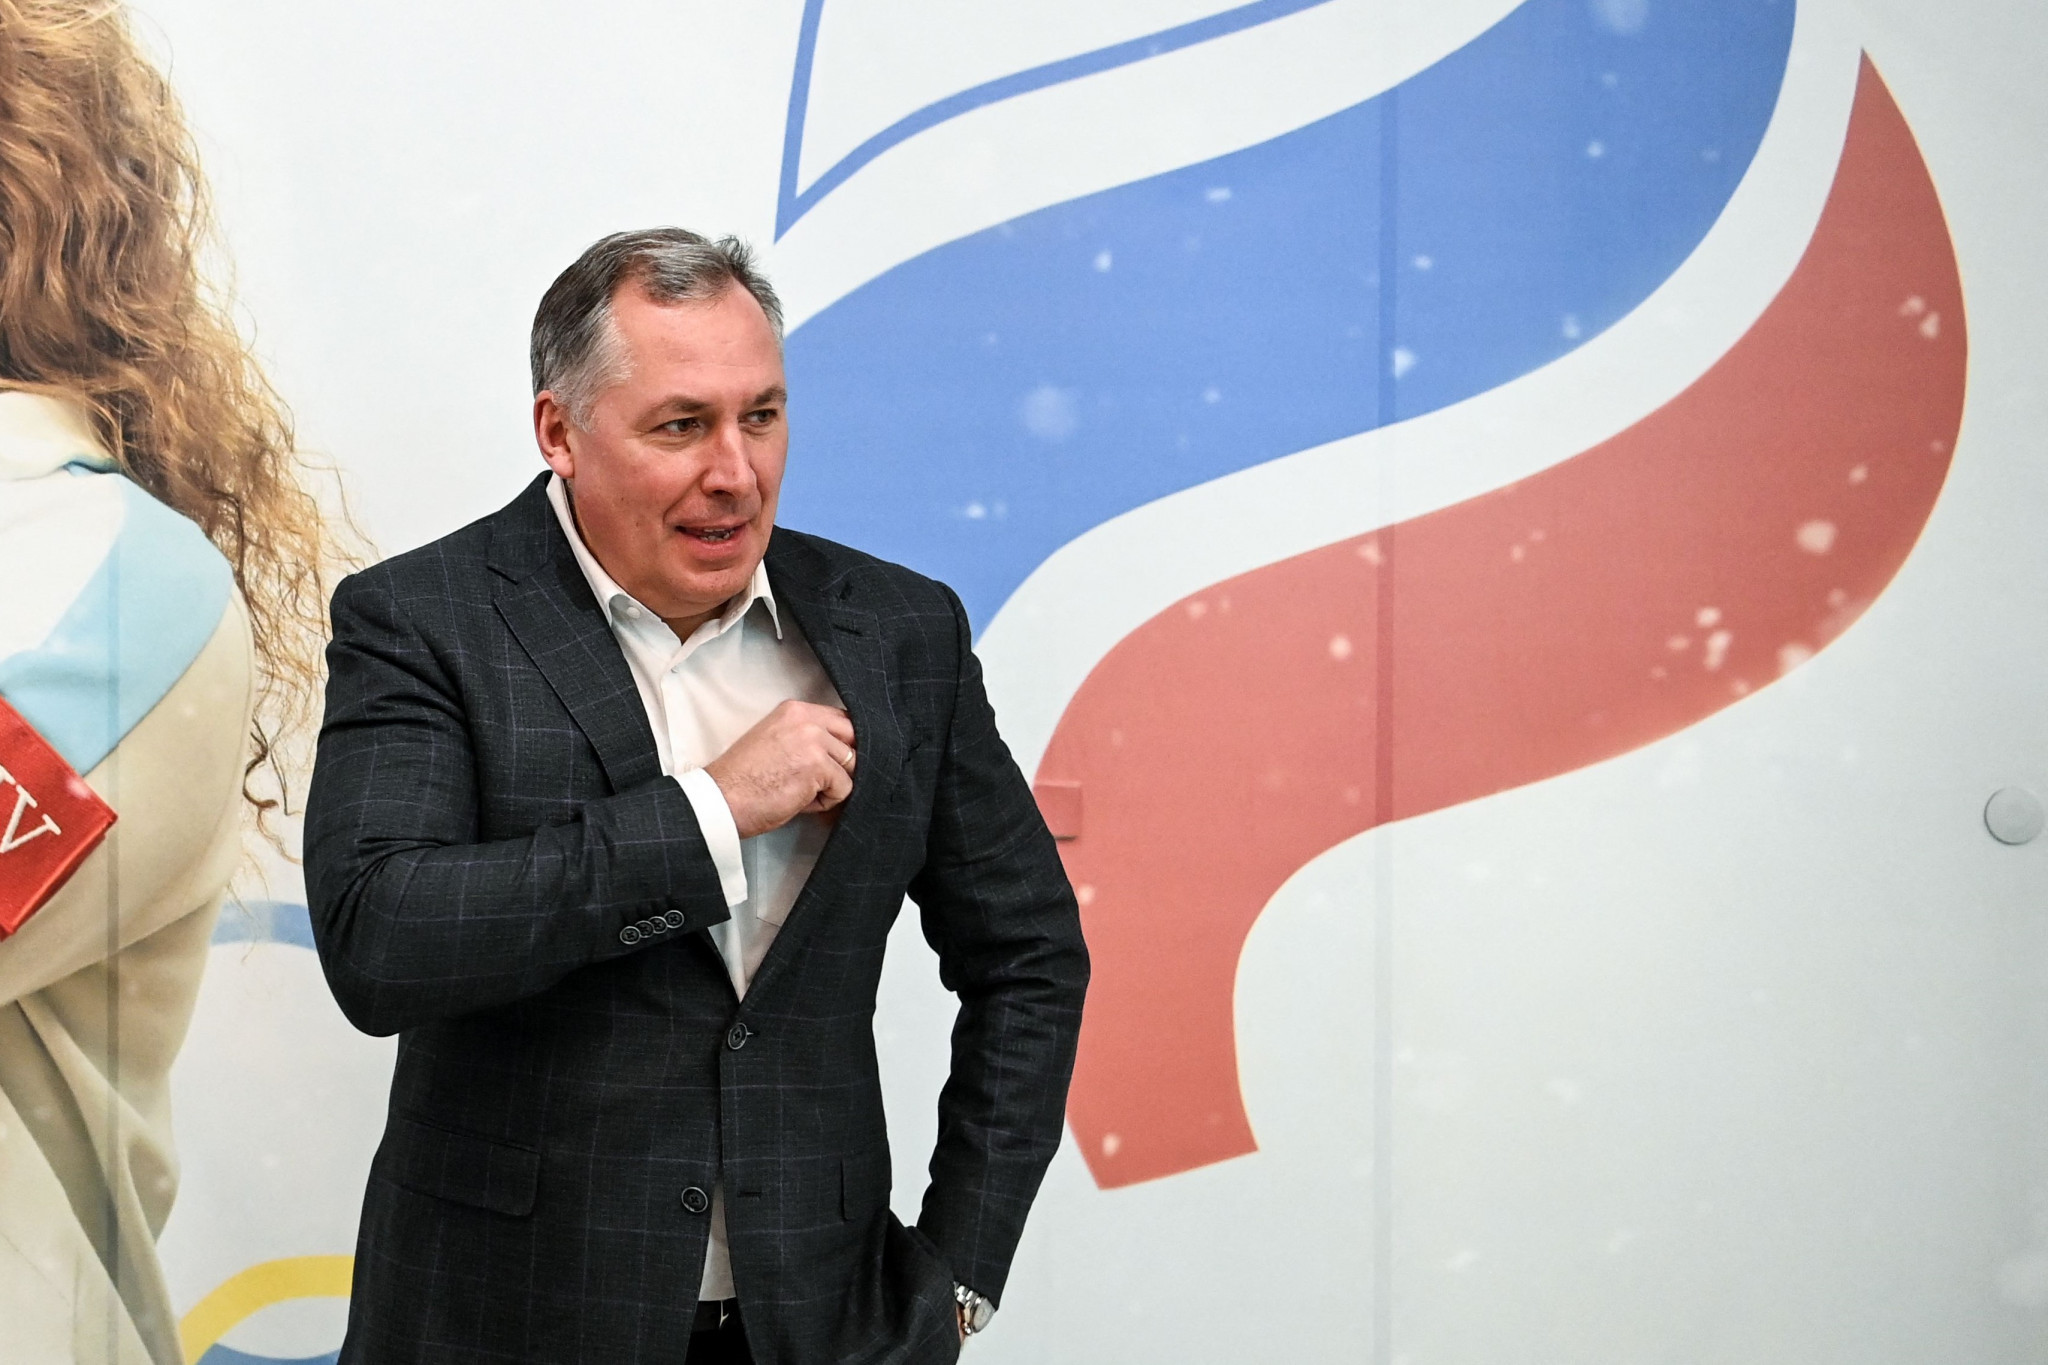 Russian NOC head Pozdnyakov in Lausanne for Olympic Summit but Ukraine decries "unacceptable" invite